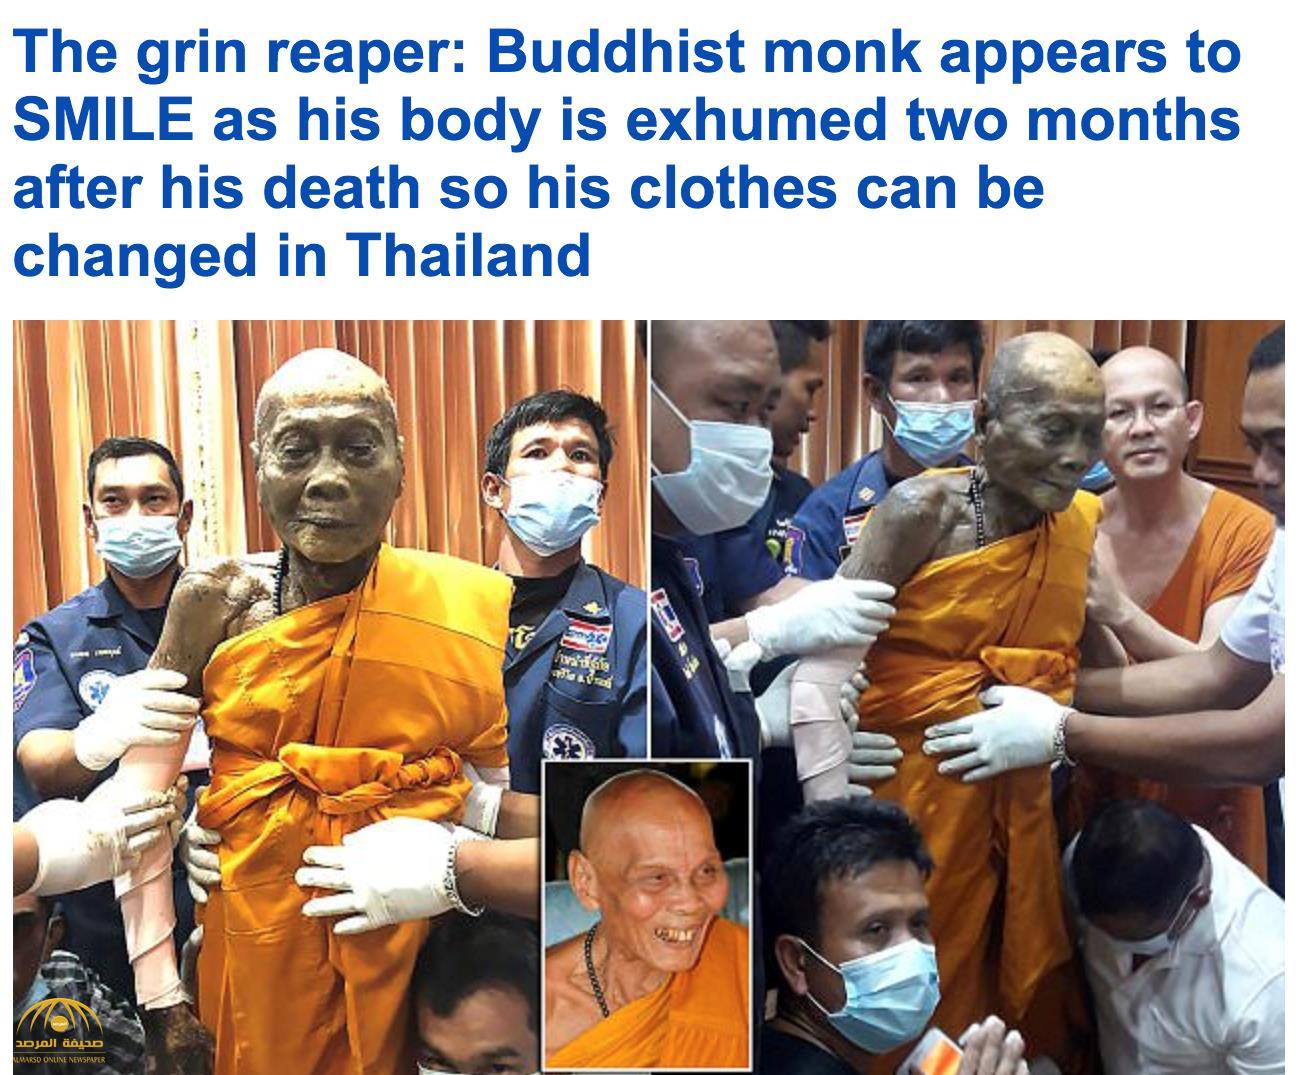 صدمة لأتباعه.. بالصور: استخراج جسد راهب بوذي بعد شهرين من وفاته.. شاهد كيف وجدوه؟